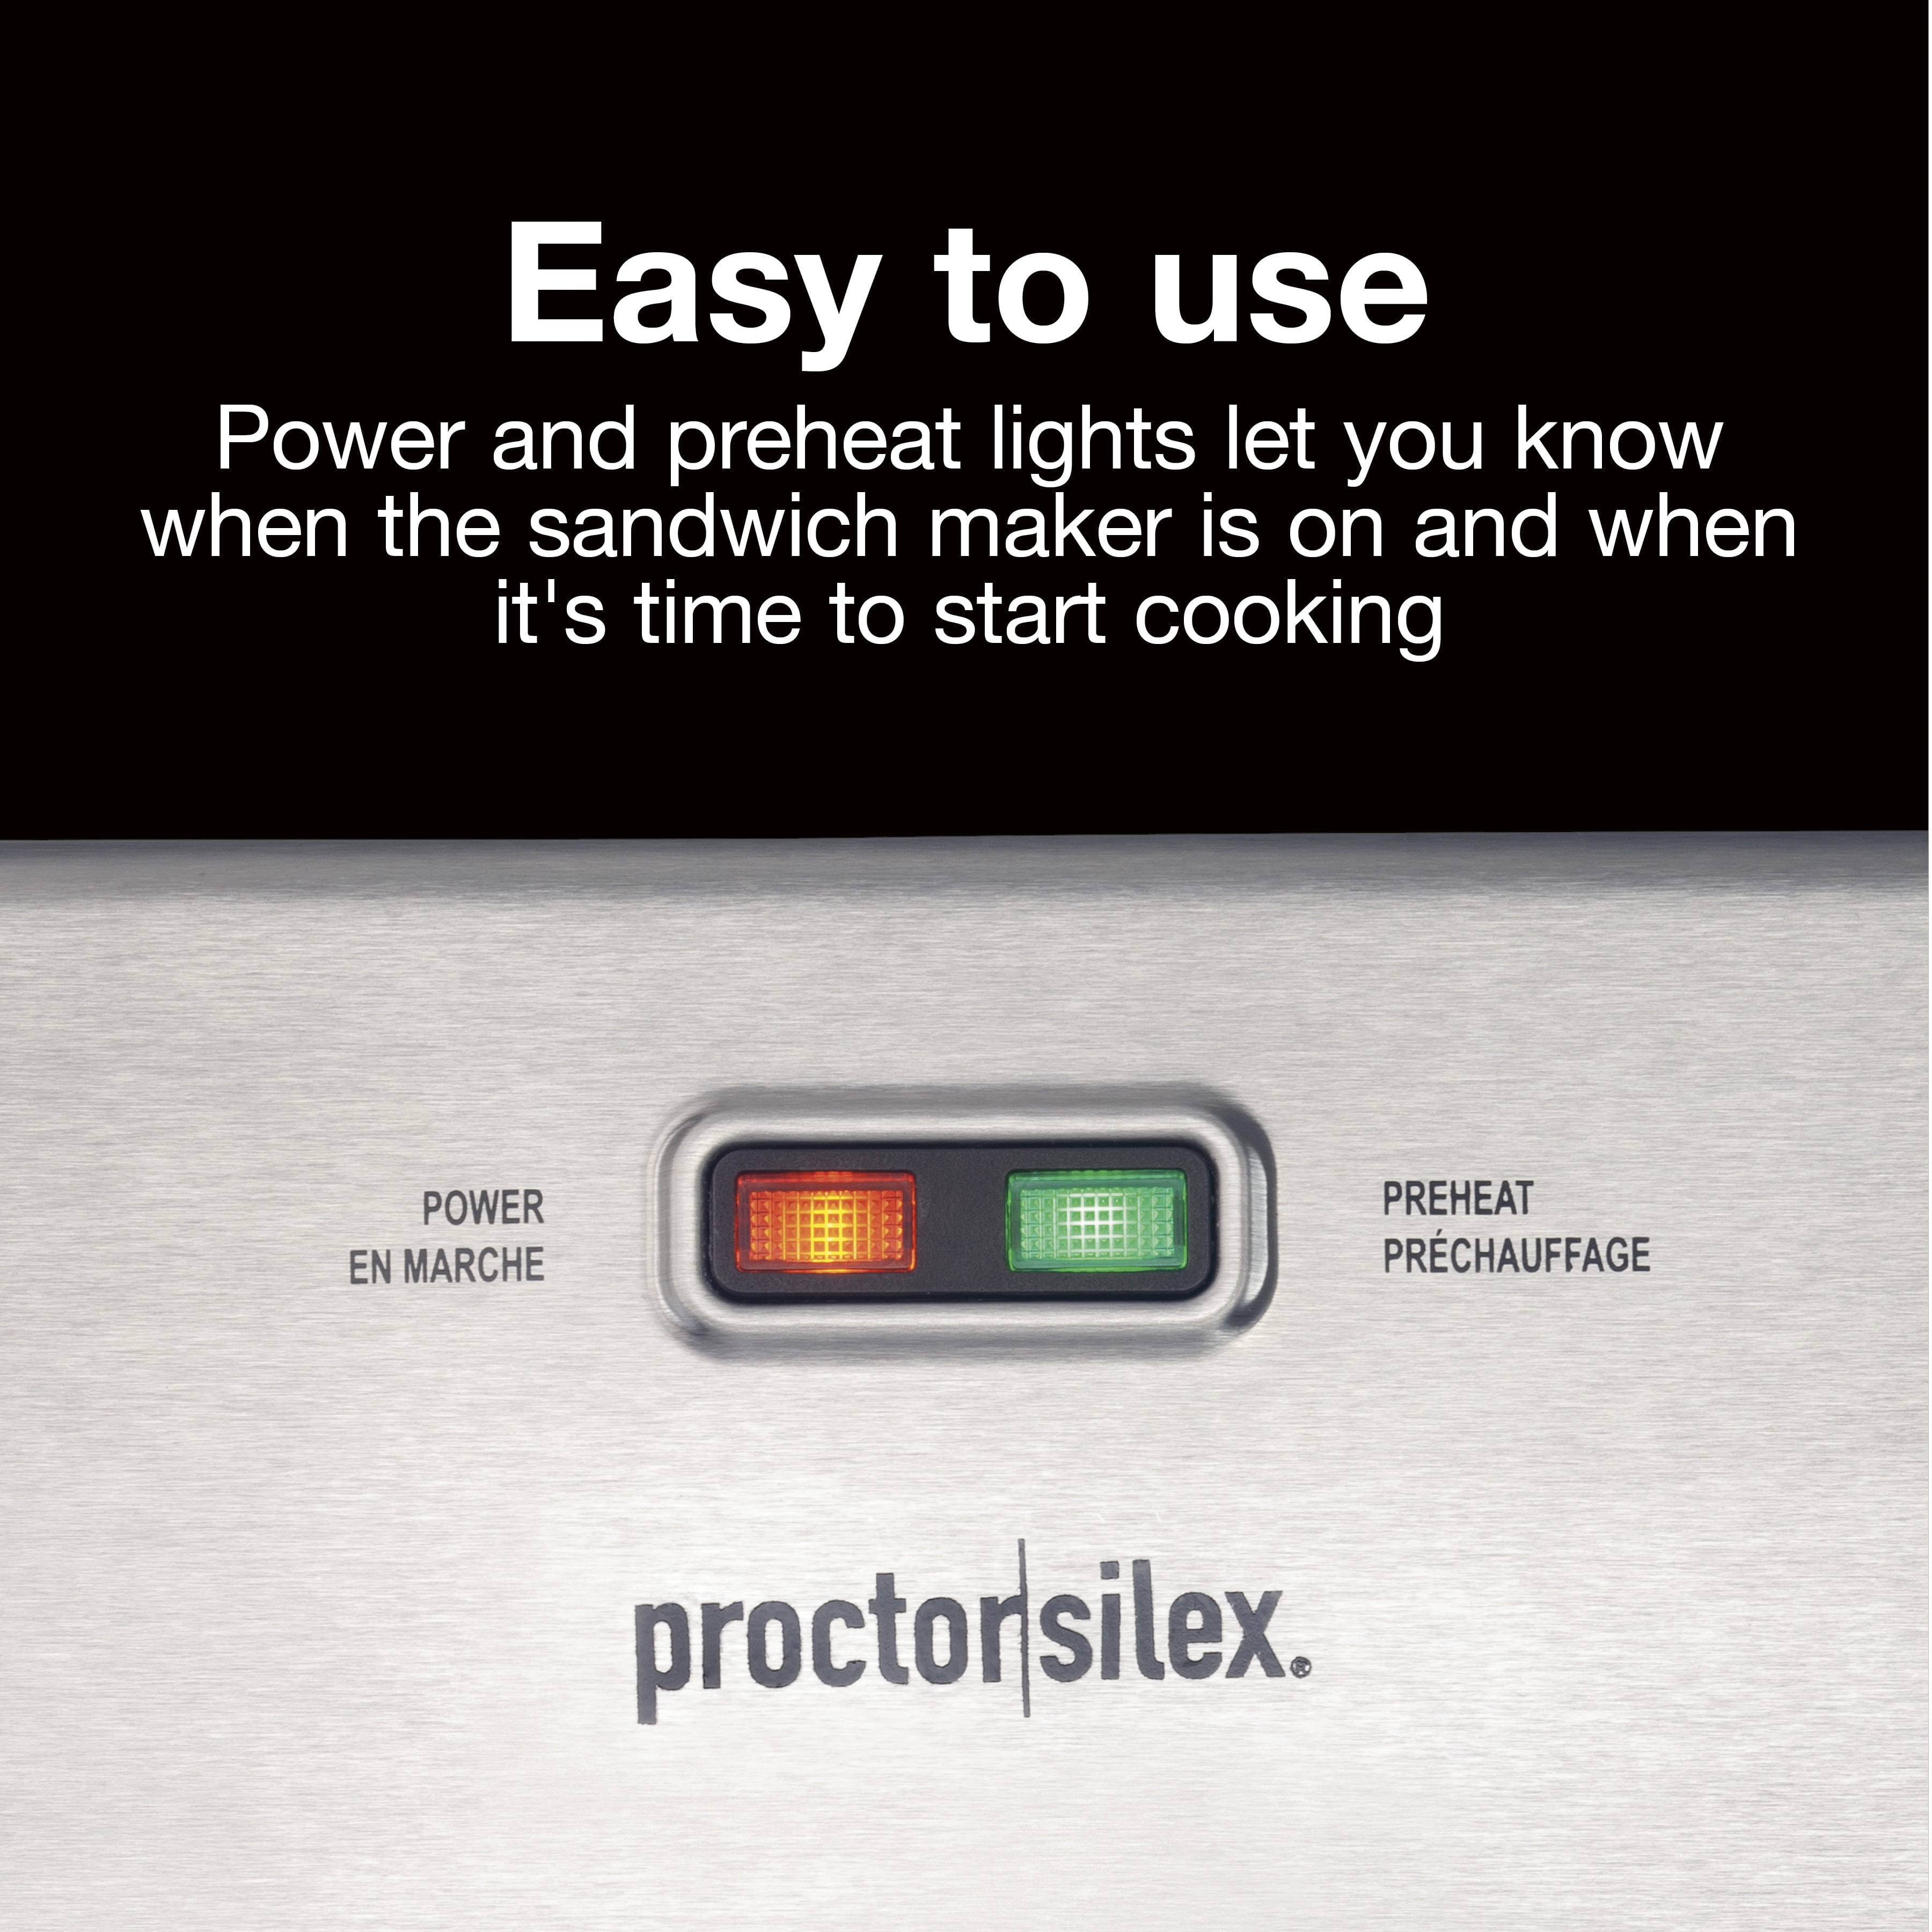 Proctor silex sandwich maker – Business Solutions – TCI One Stop Shop